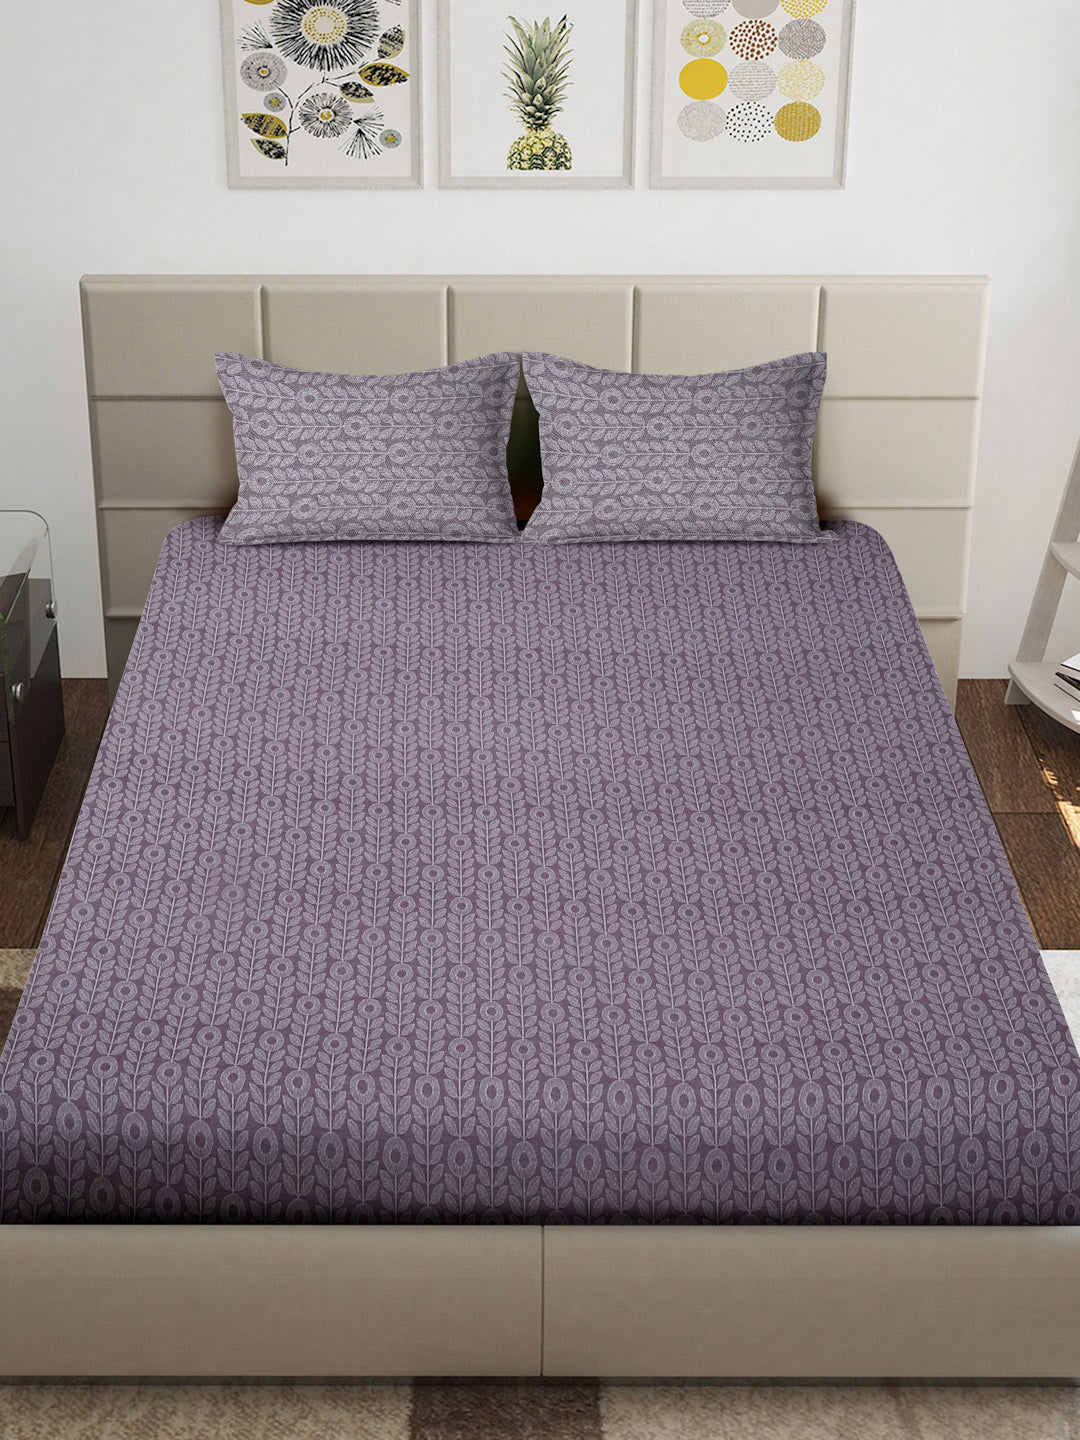 Arrabi Purple Floral 100% Handwoven Cotton Super King Size Bedsheet with 2 Pillow Covers (270 x 260 cm)